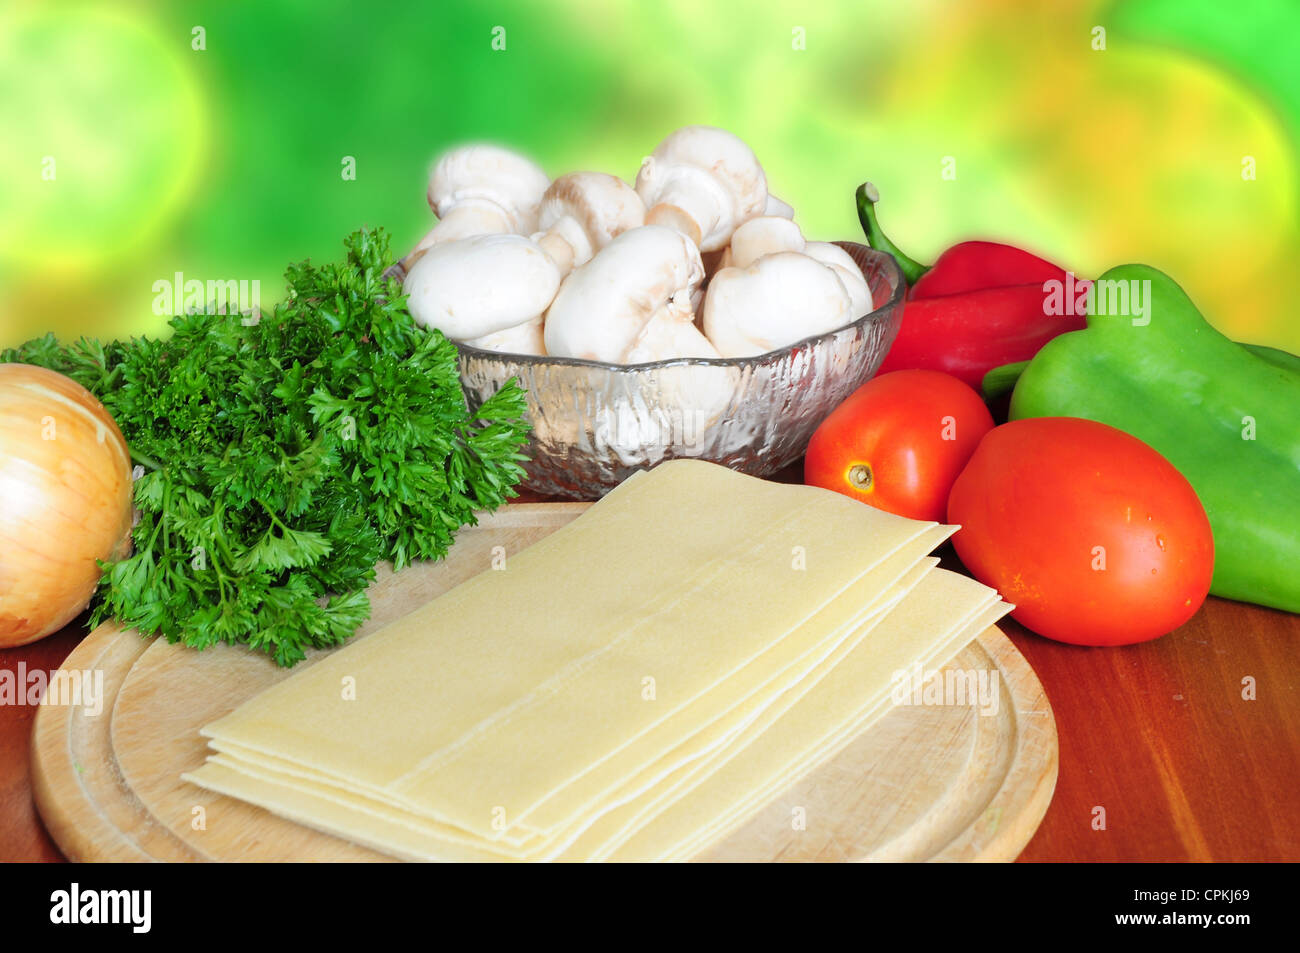 Zutaten für Lasagne - Tomaten, Pfeffer, Petersilie, Pilze, Zwiebeln, Nudeln Stockfoto